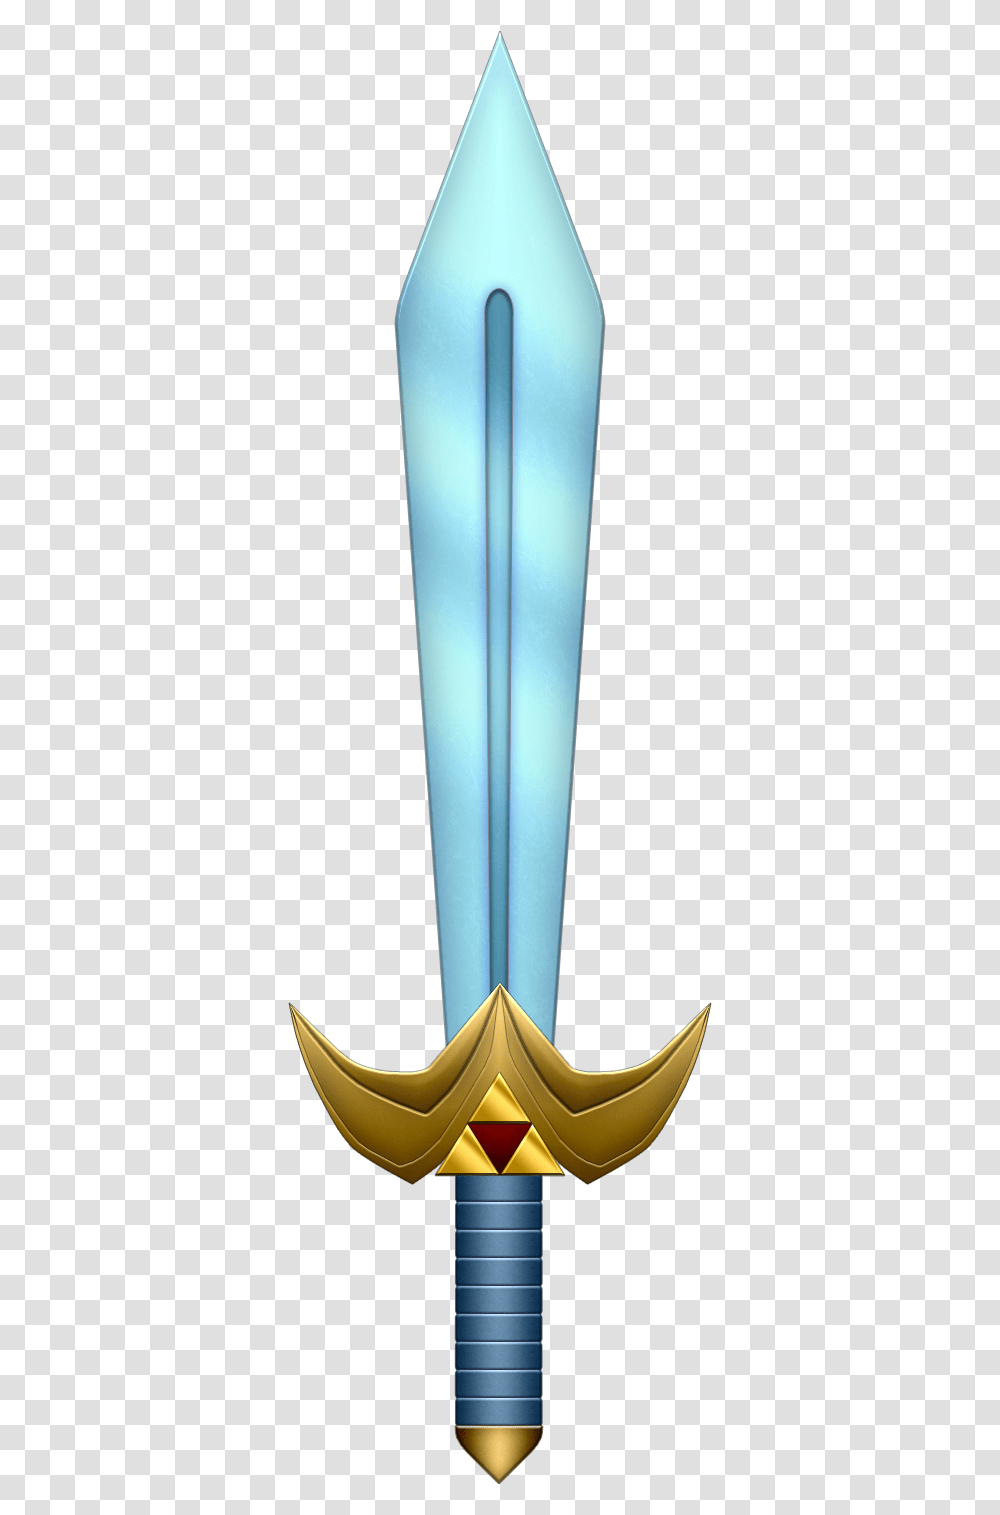 The Legend Of Zelda Link Zelda Fighters Sword, Light Fixture, Cylinder, Tabletop, Cutlery Transparent Png